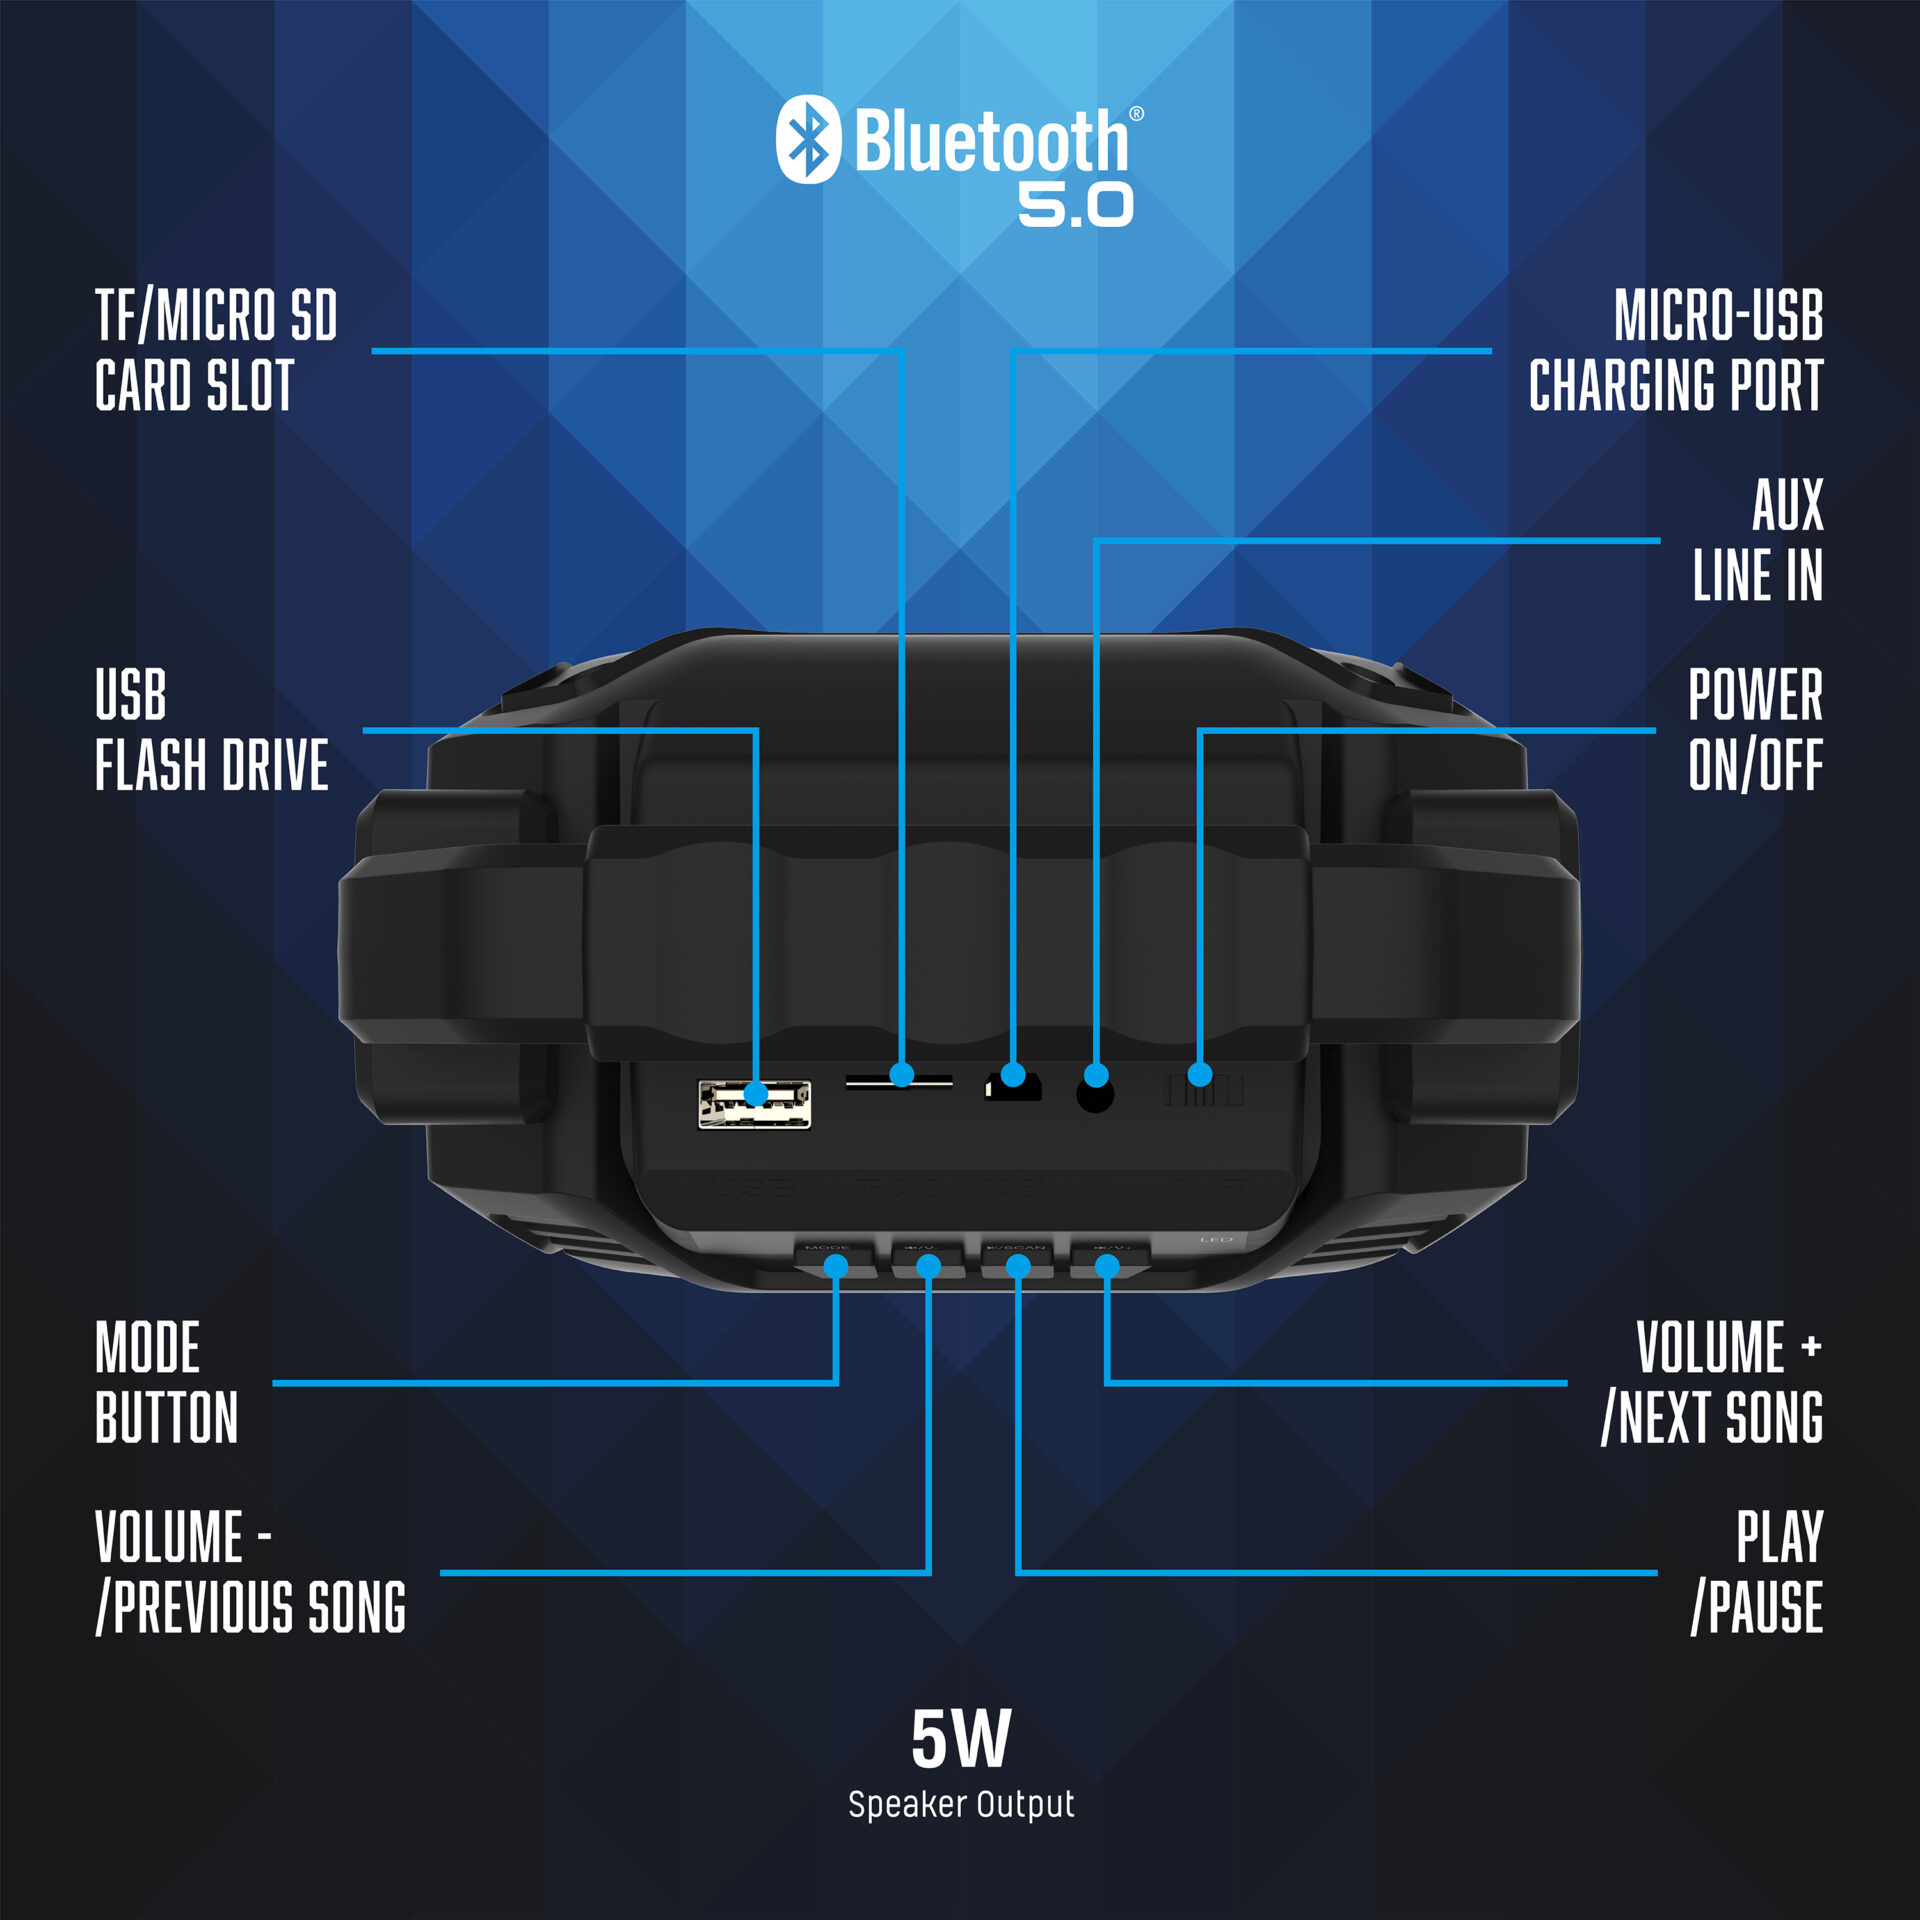 BOOST 10-7138BO Enceinte active autonome a LED - Bluetooth, USB, micro-SD,  Tuner FM - 2 x 6,5 / 16 cm - 280 W - Noir